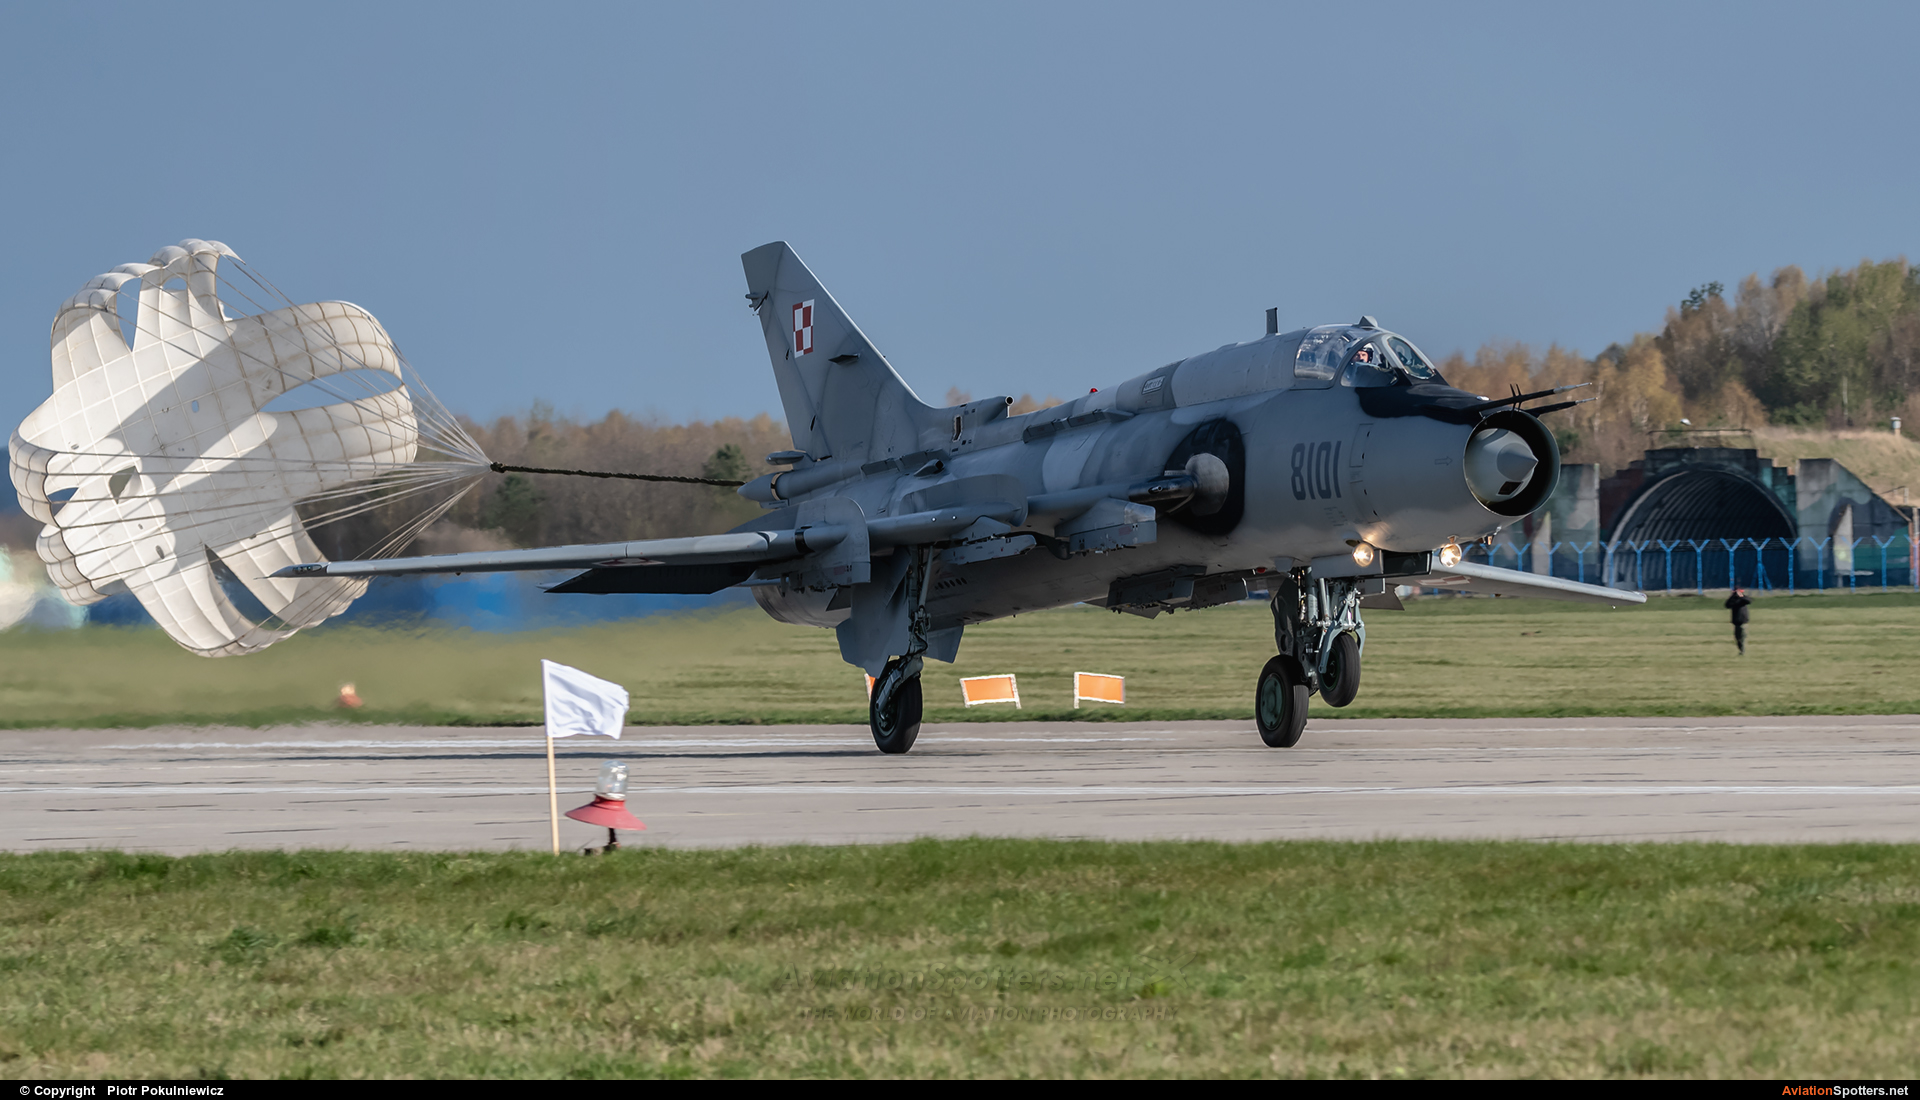 Poland - Air Force  -  Su-22M-4  (8101) By Piotr Pokulniewicz (Piciu)